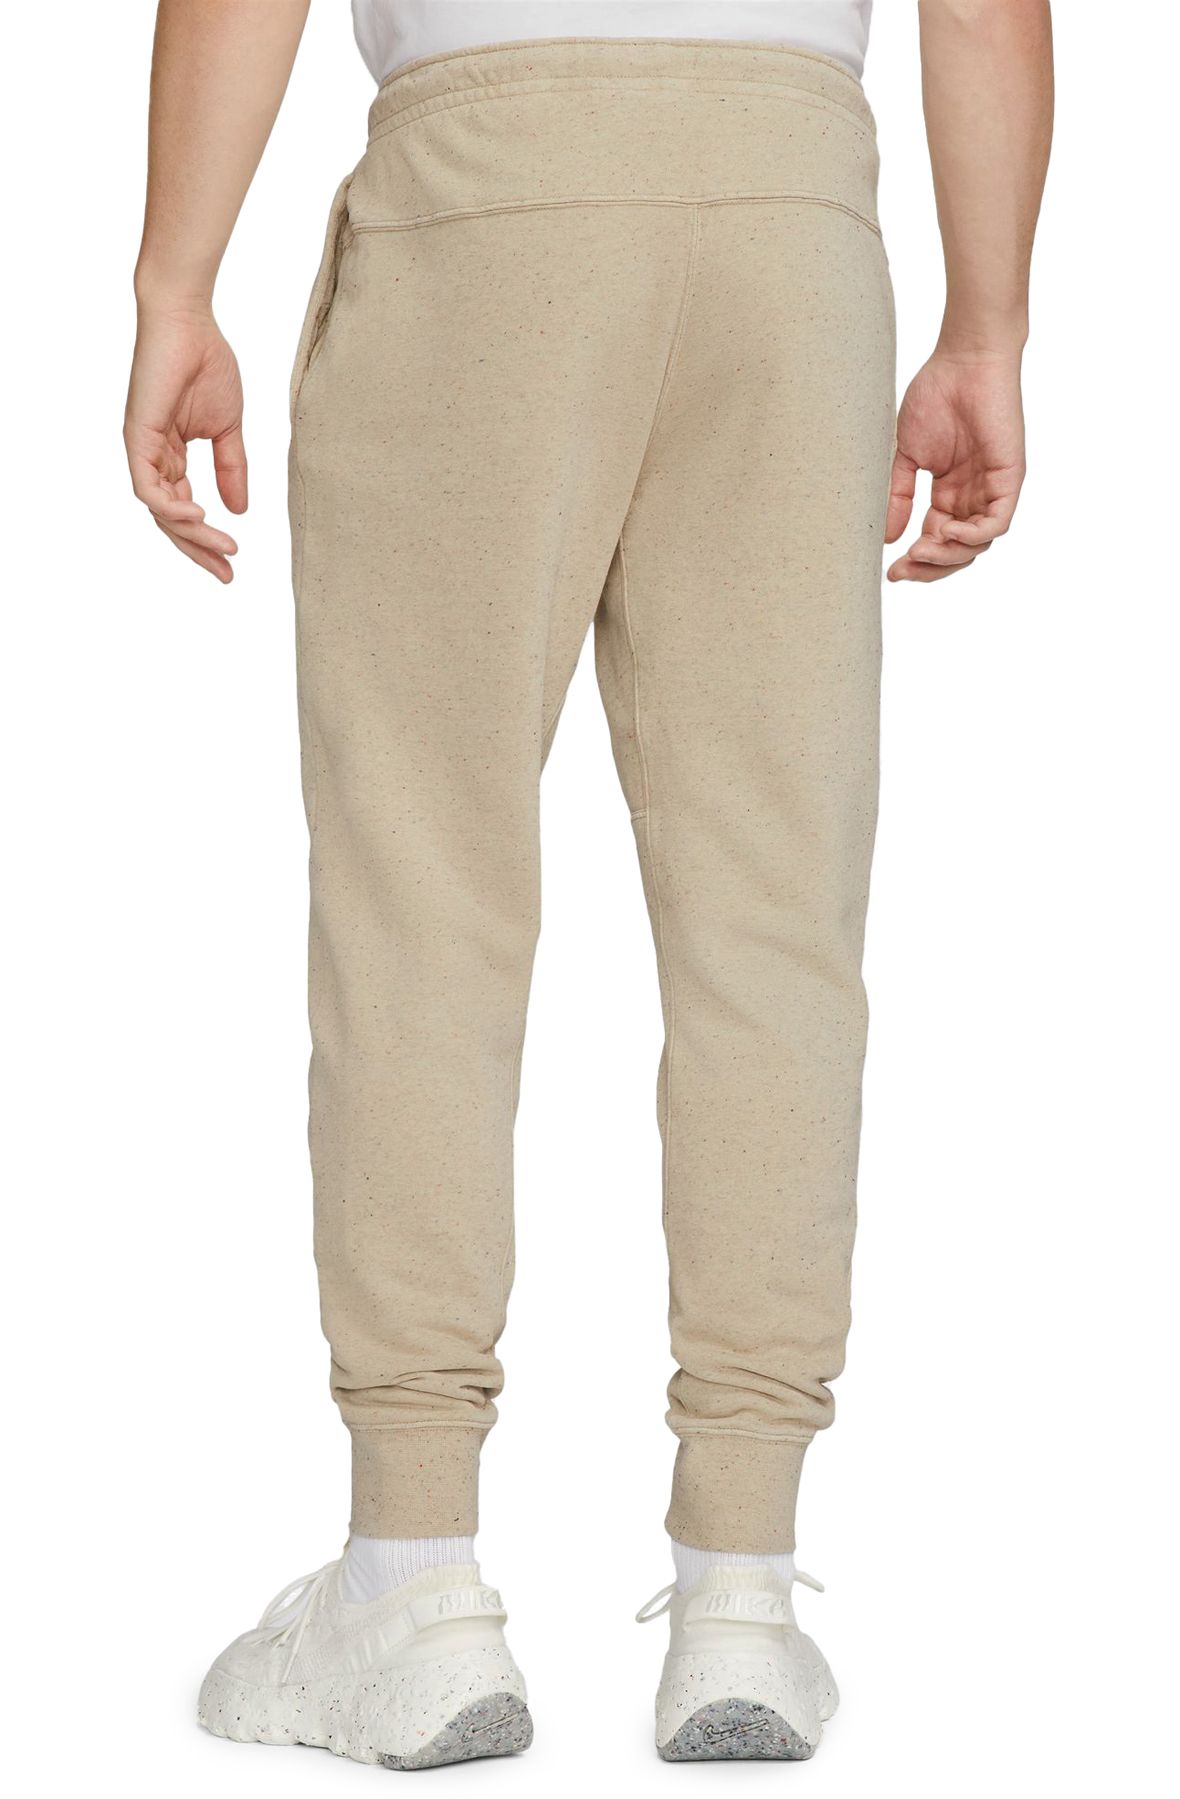 NIKE Sportswear Tech Fleece Pants BV3472 010 - Shiekh